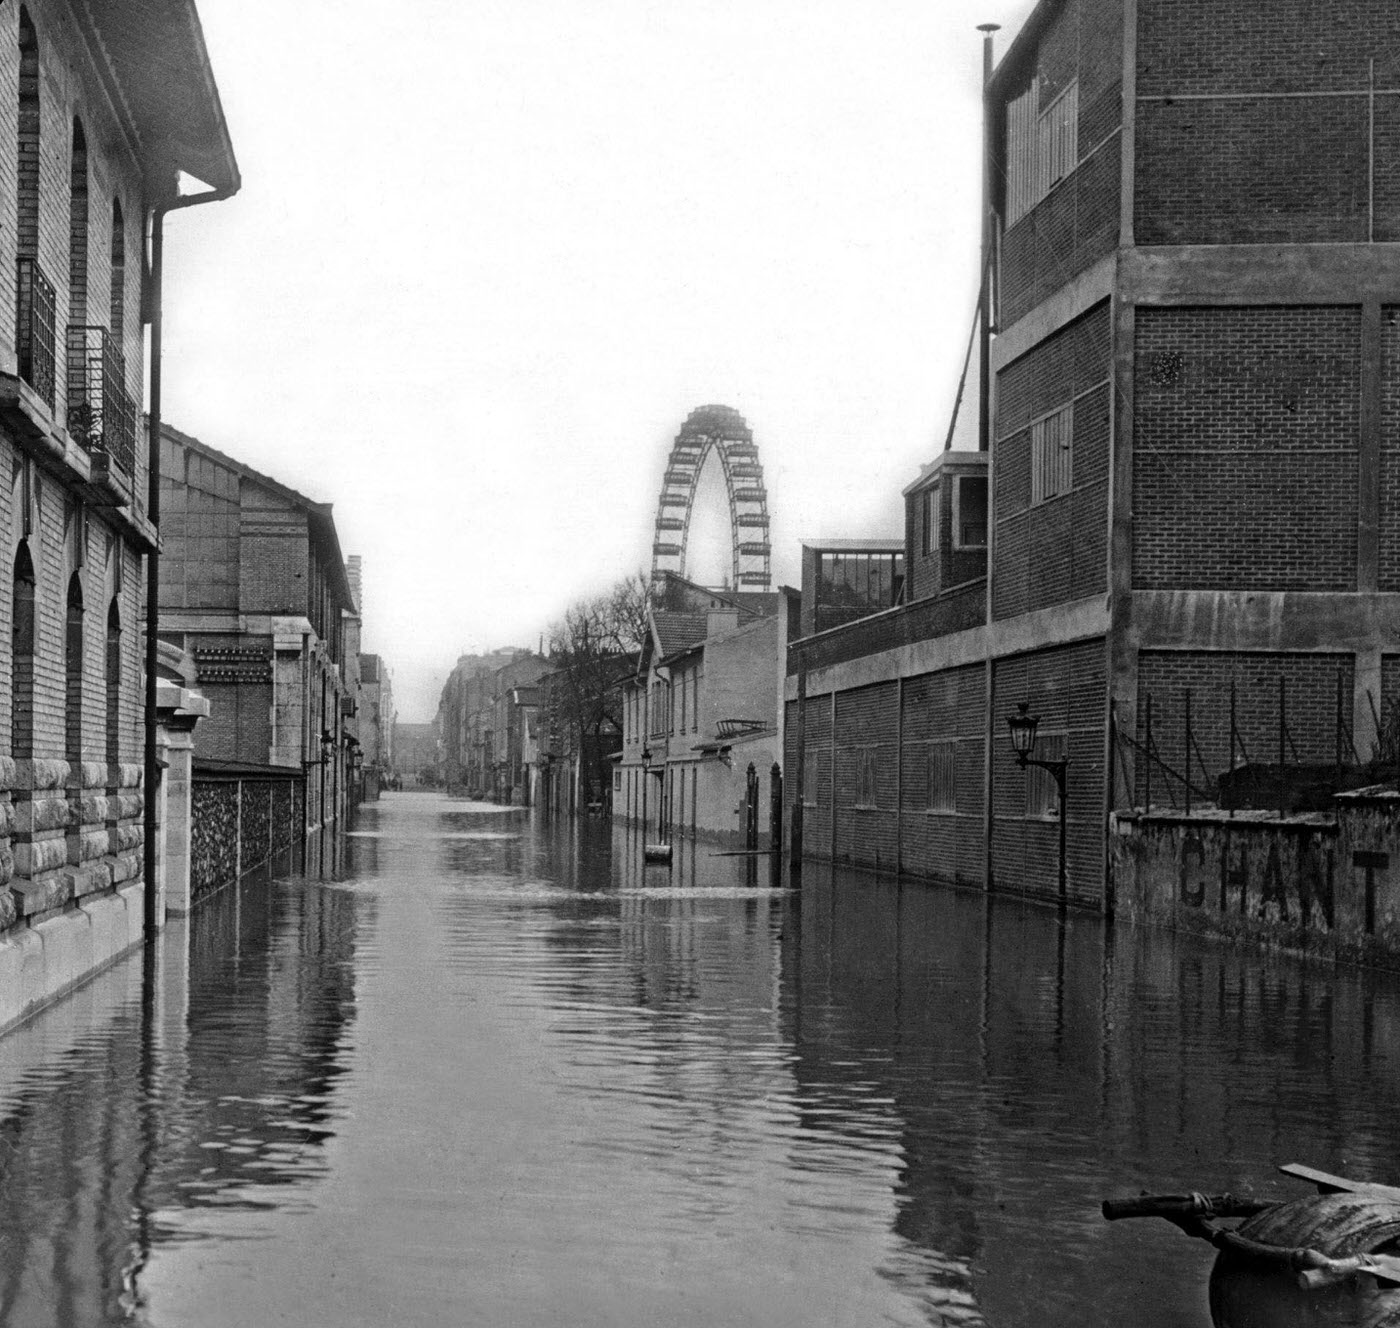 Flooding in Paris by rue de la federation following Seine river flood, 1910.